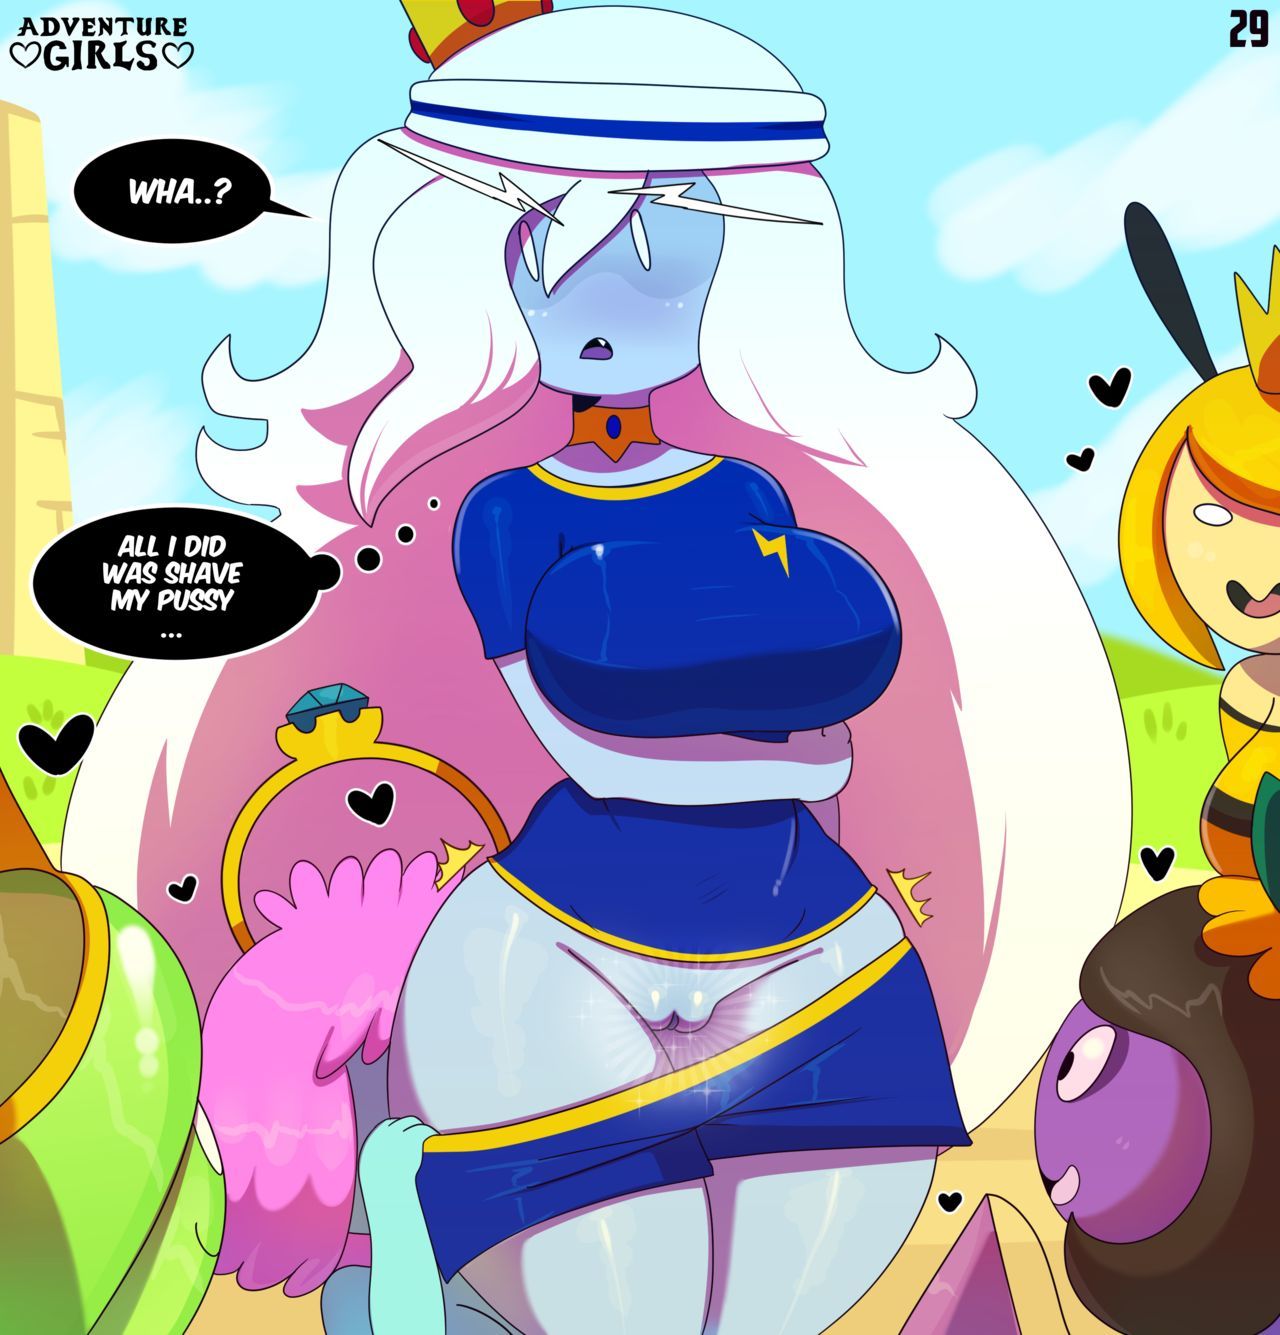 Adventure Girls - Somescrub [Adventure Time] page 29